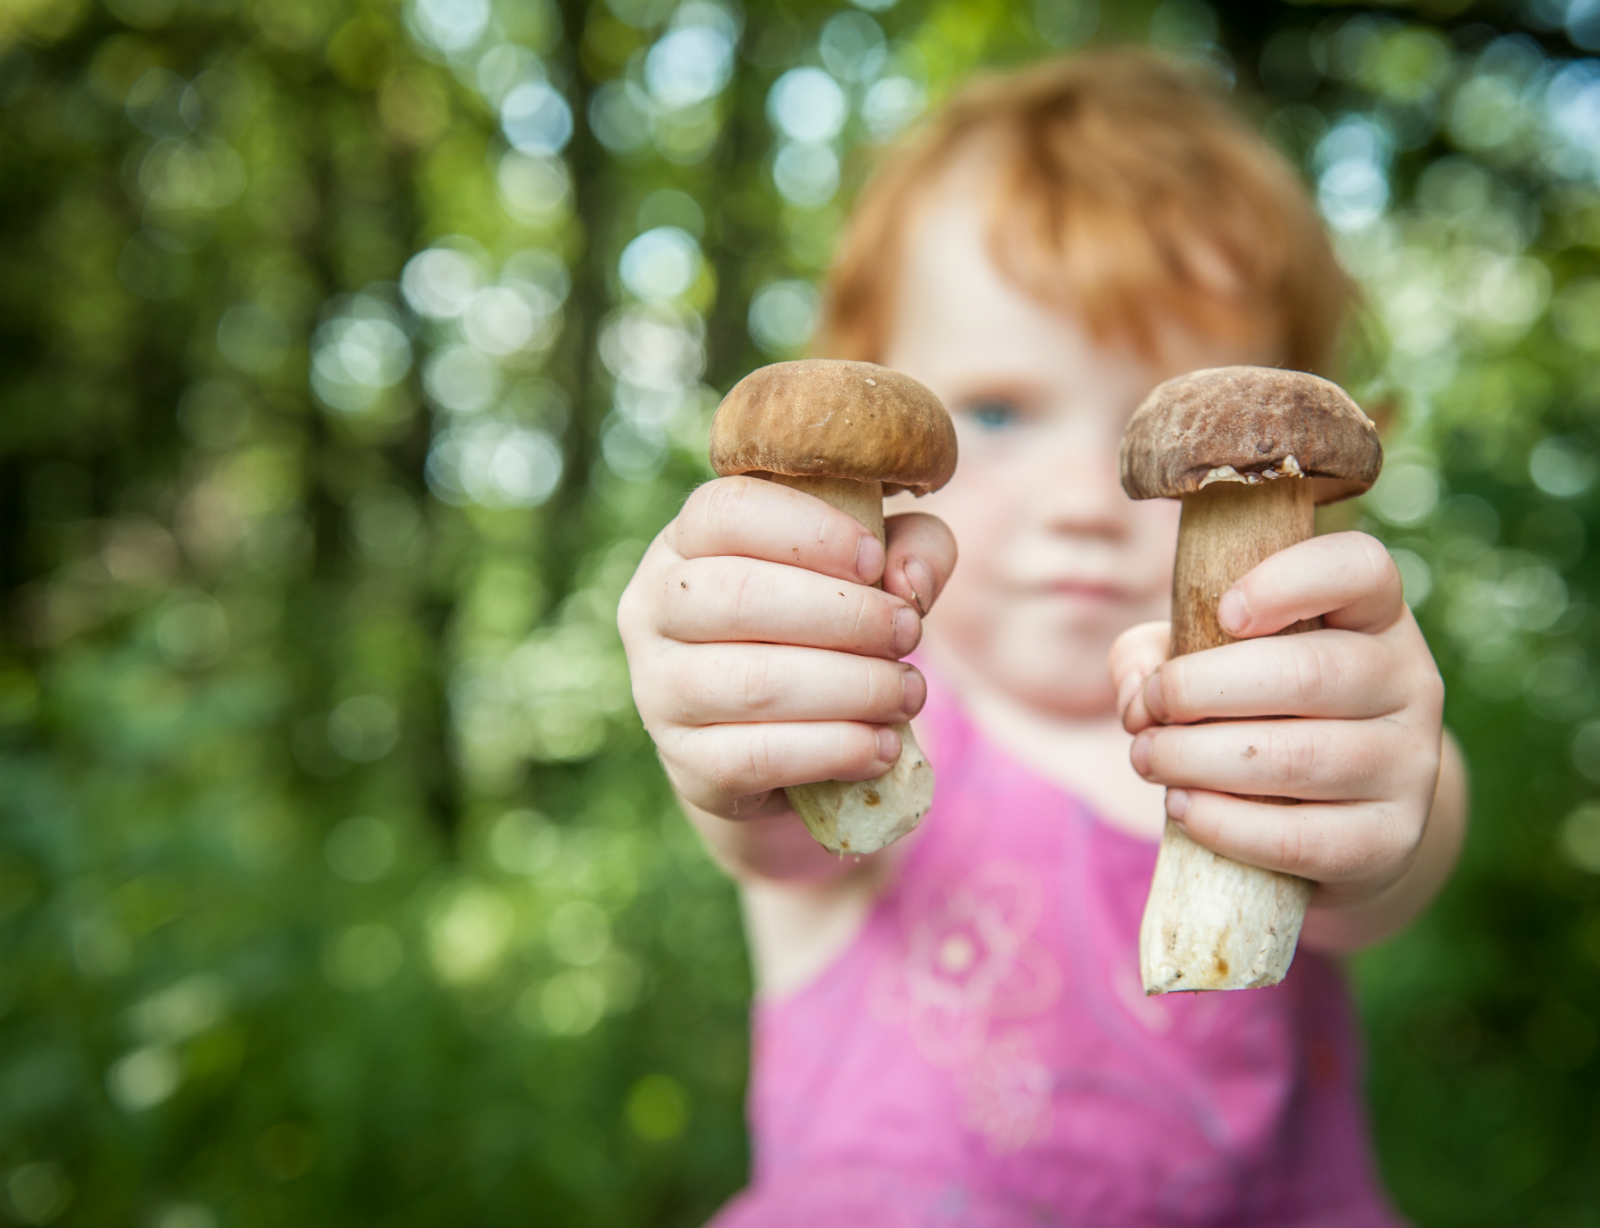 Is mushroom coffee an ingenious way to reduce stress? Coffee + mushroom is more 